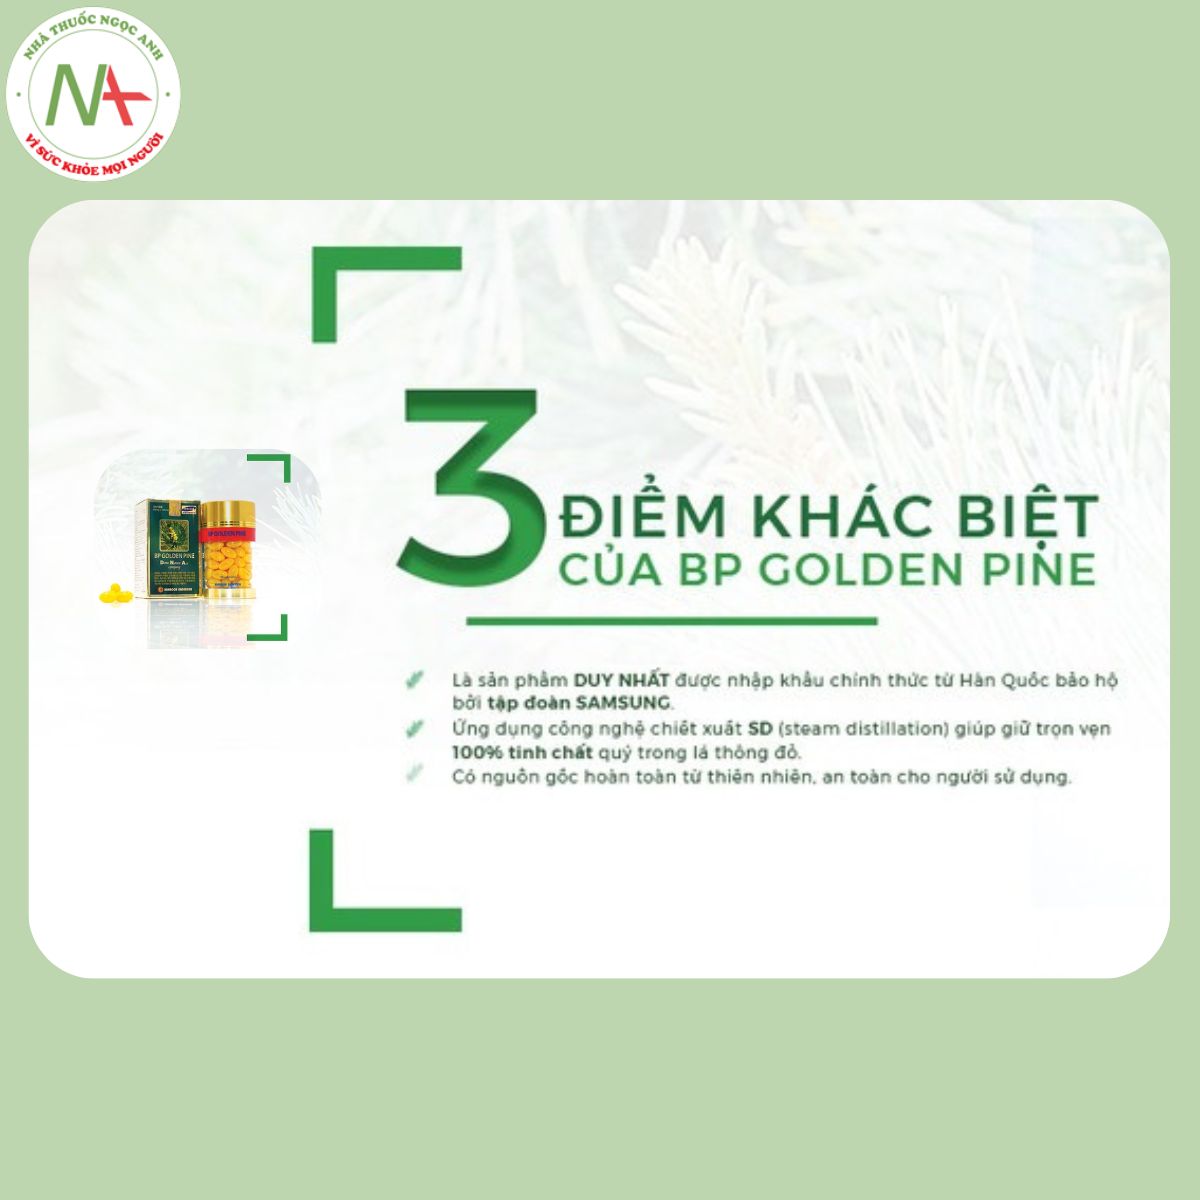 BP Golden Pine nhathuocngocanh